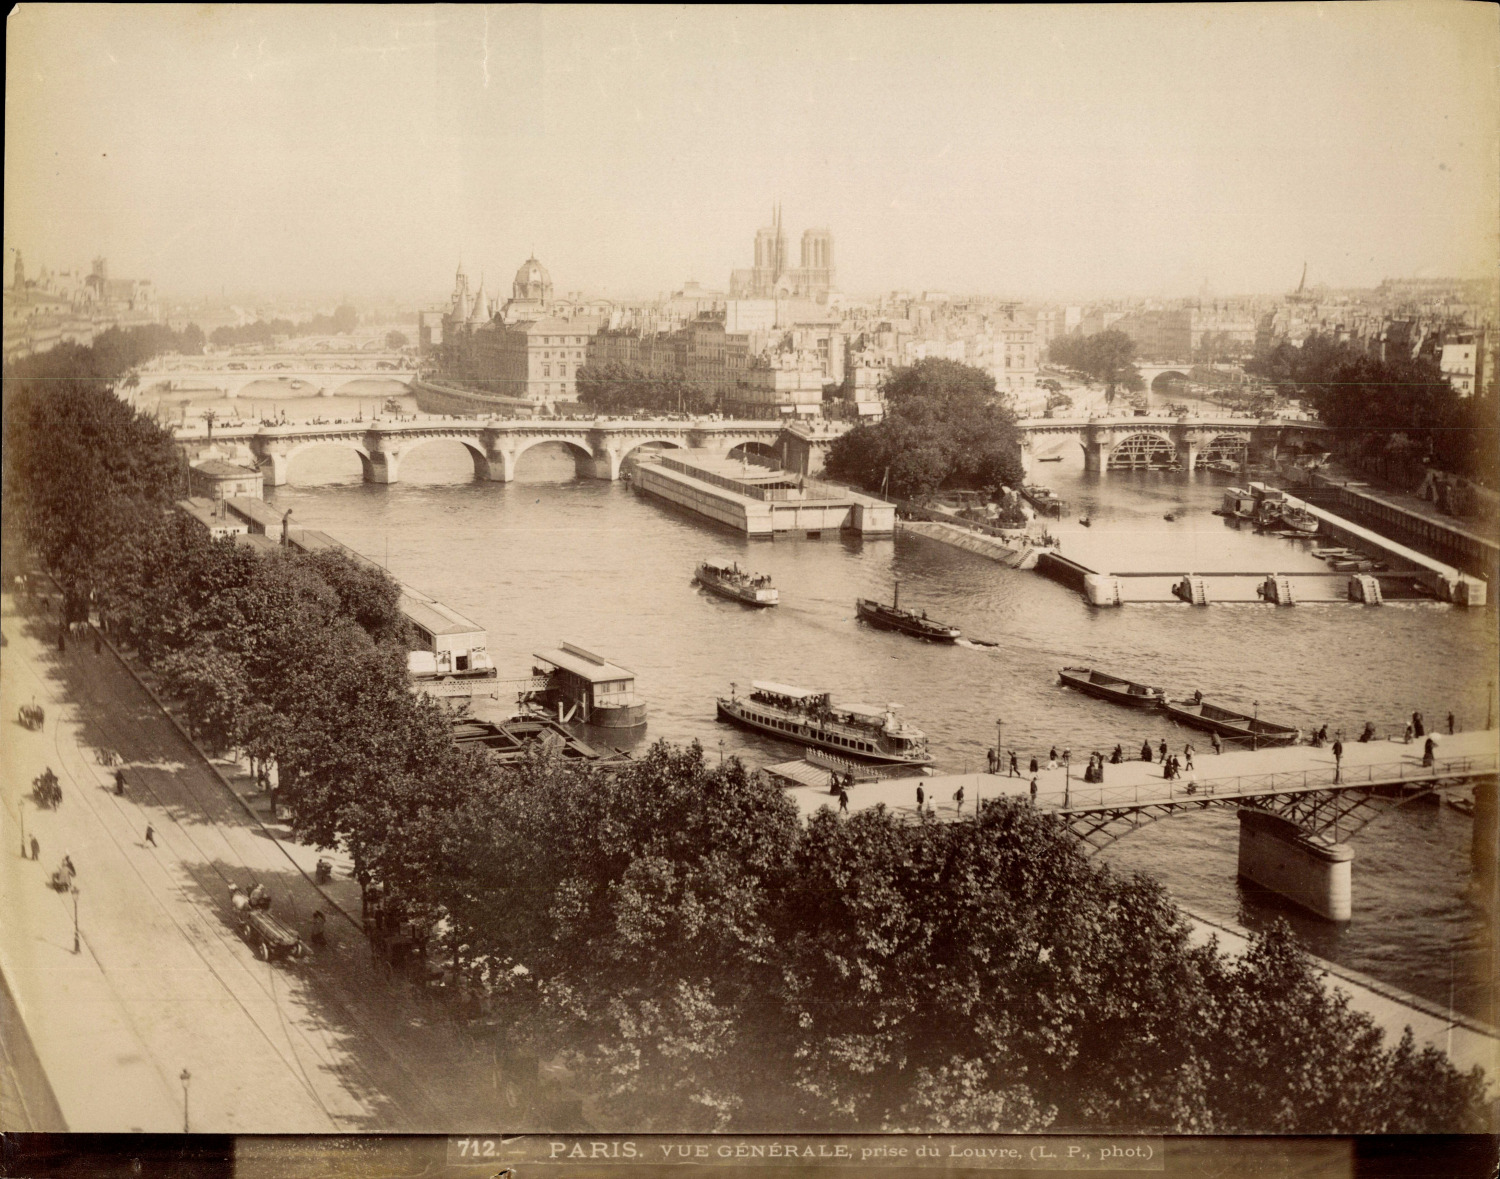 France, Paris, general view taken of the Louvre, L.P Phot. Vintage Print, Print 